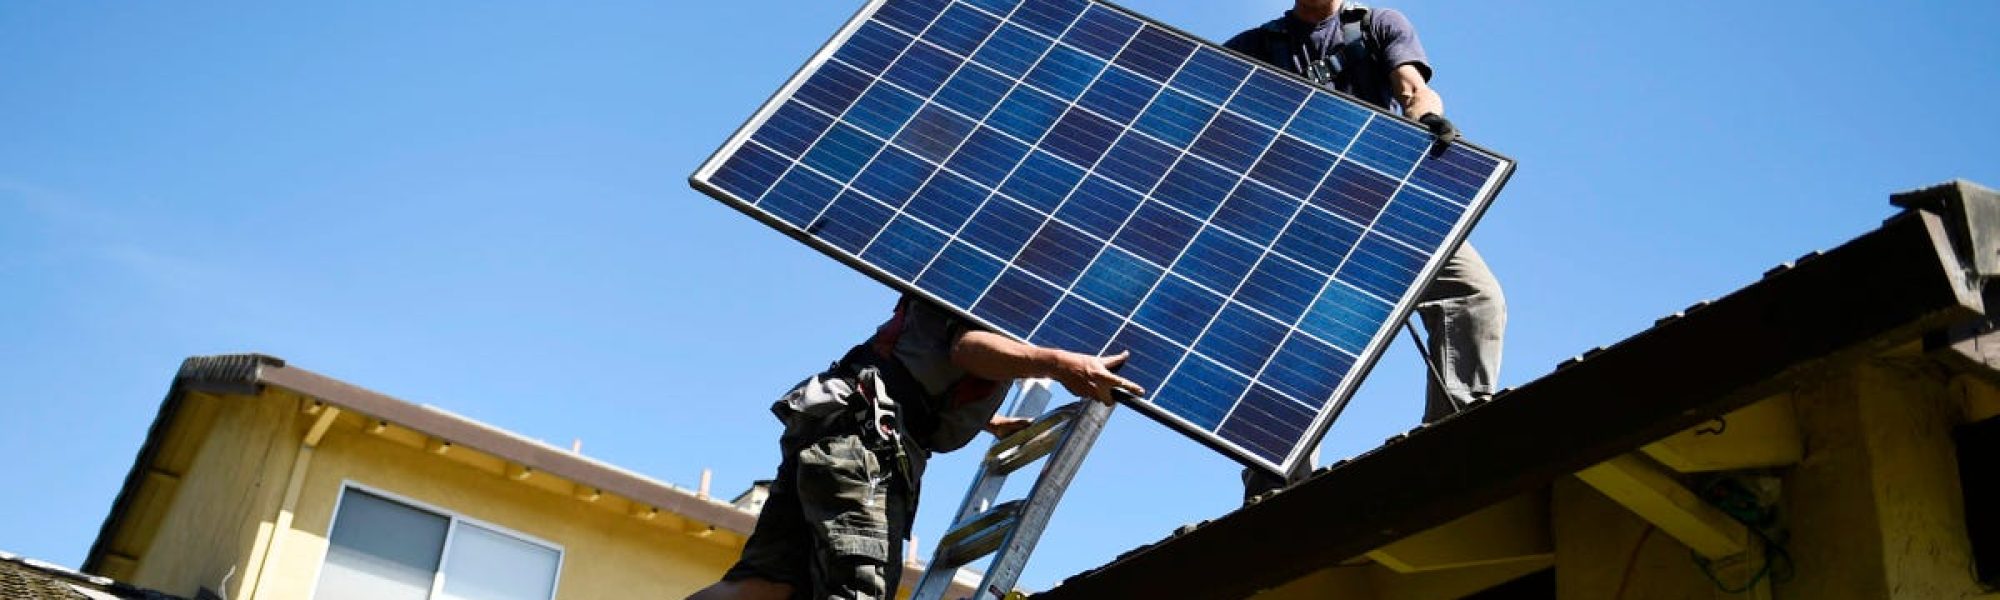 Sunrun Stock: Is This Solar Stock A Winner Or Going Dark?